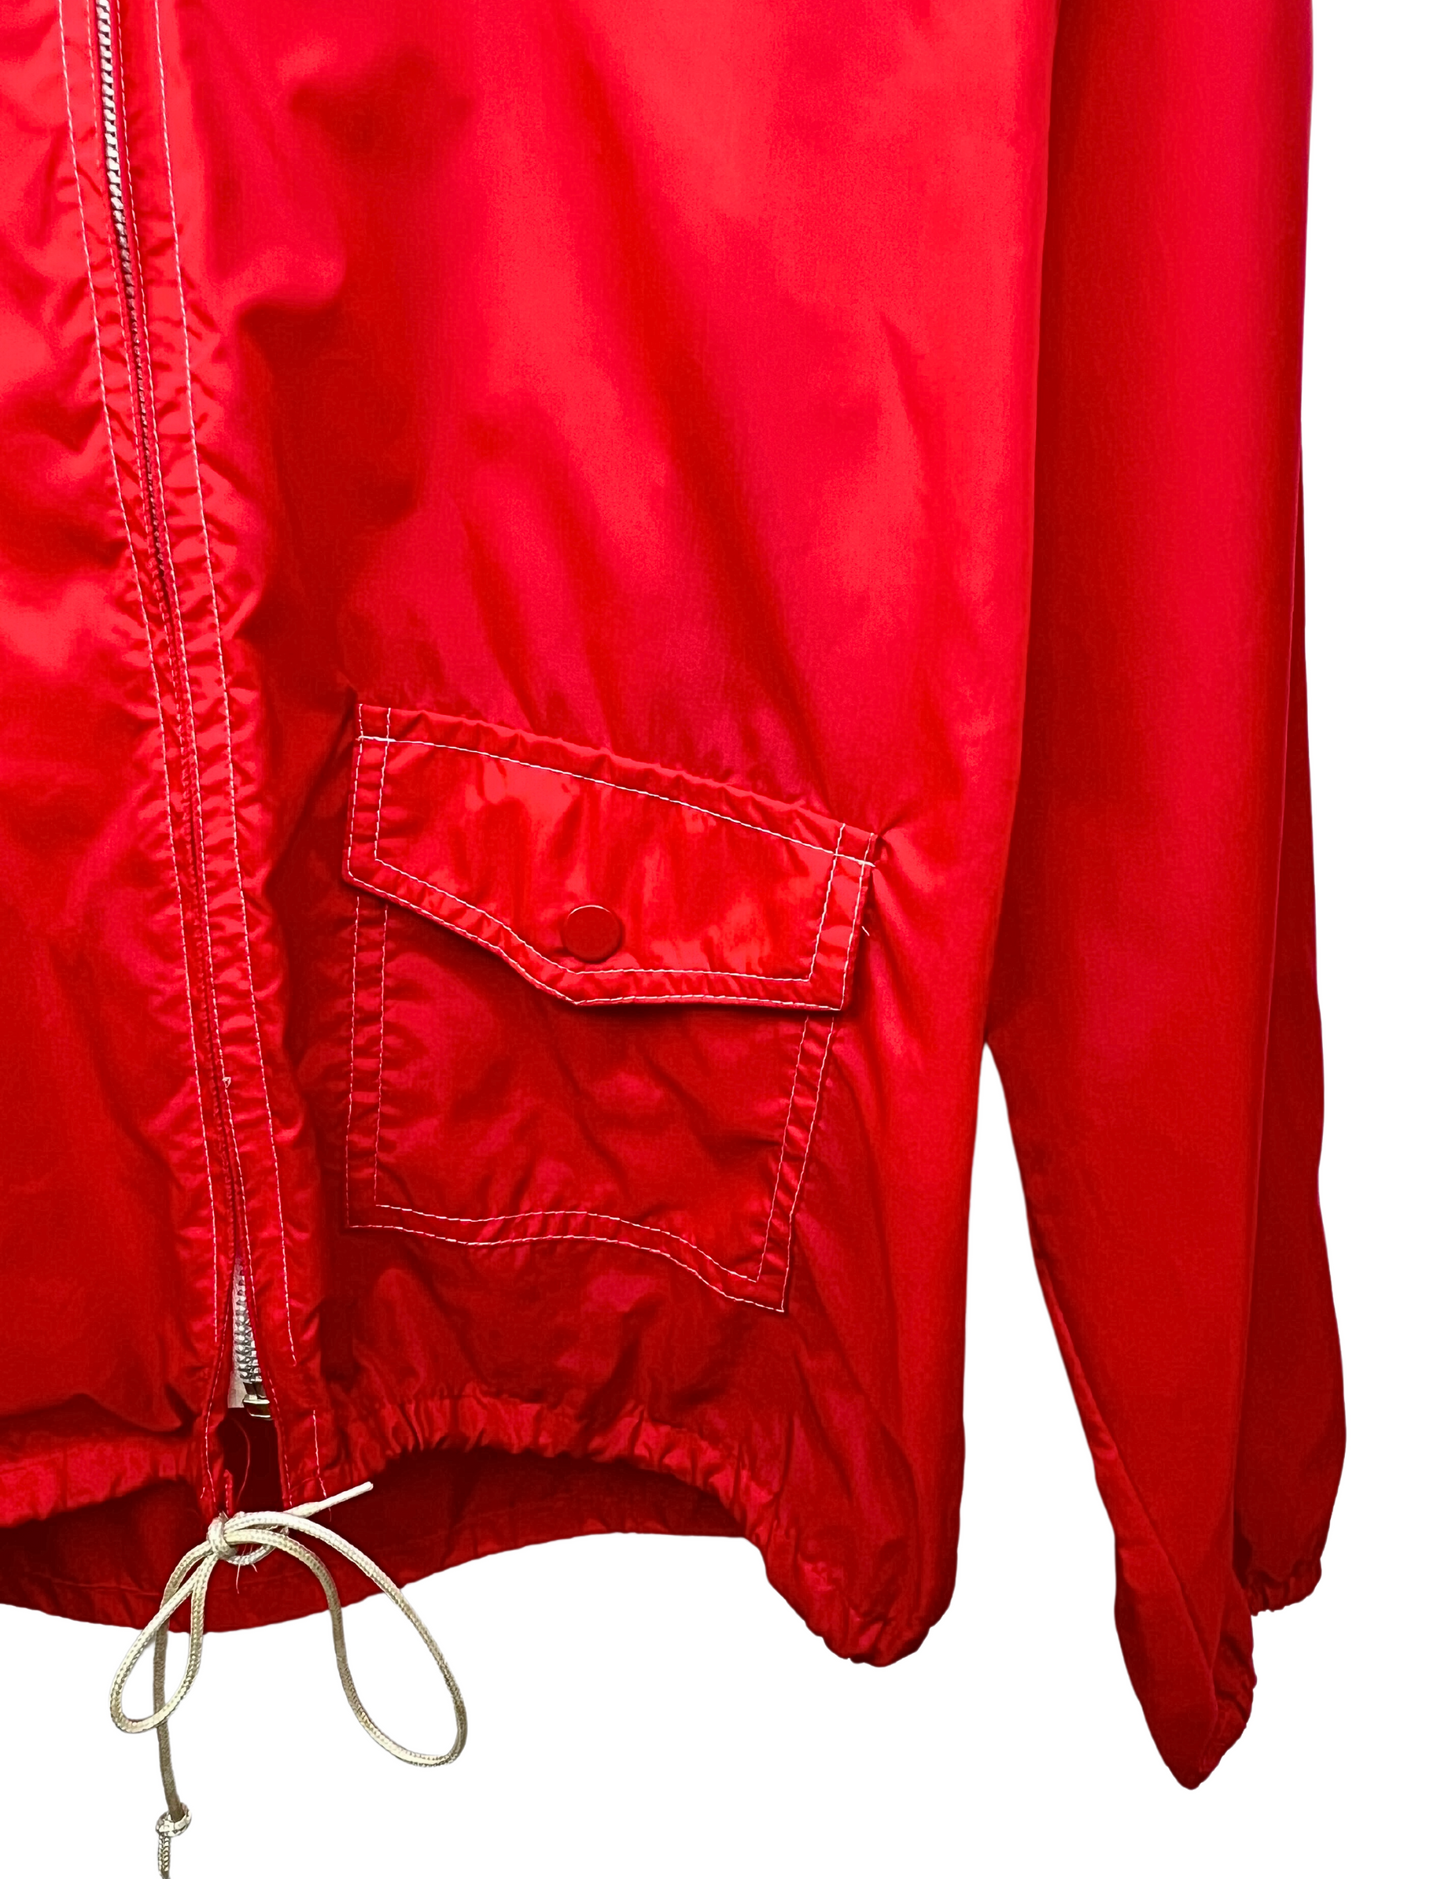 70's KALASHIAN FOODS Sears Flocked Lettering Foldable Hood Nylon WINDBREAKER Jacket Size Small